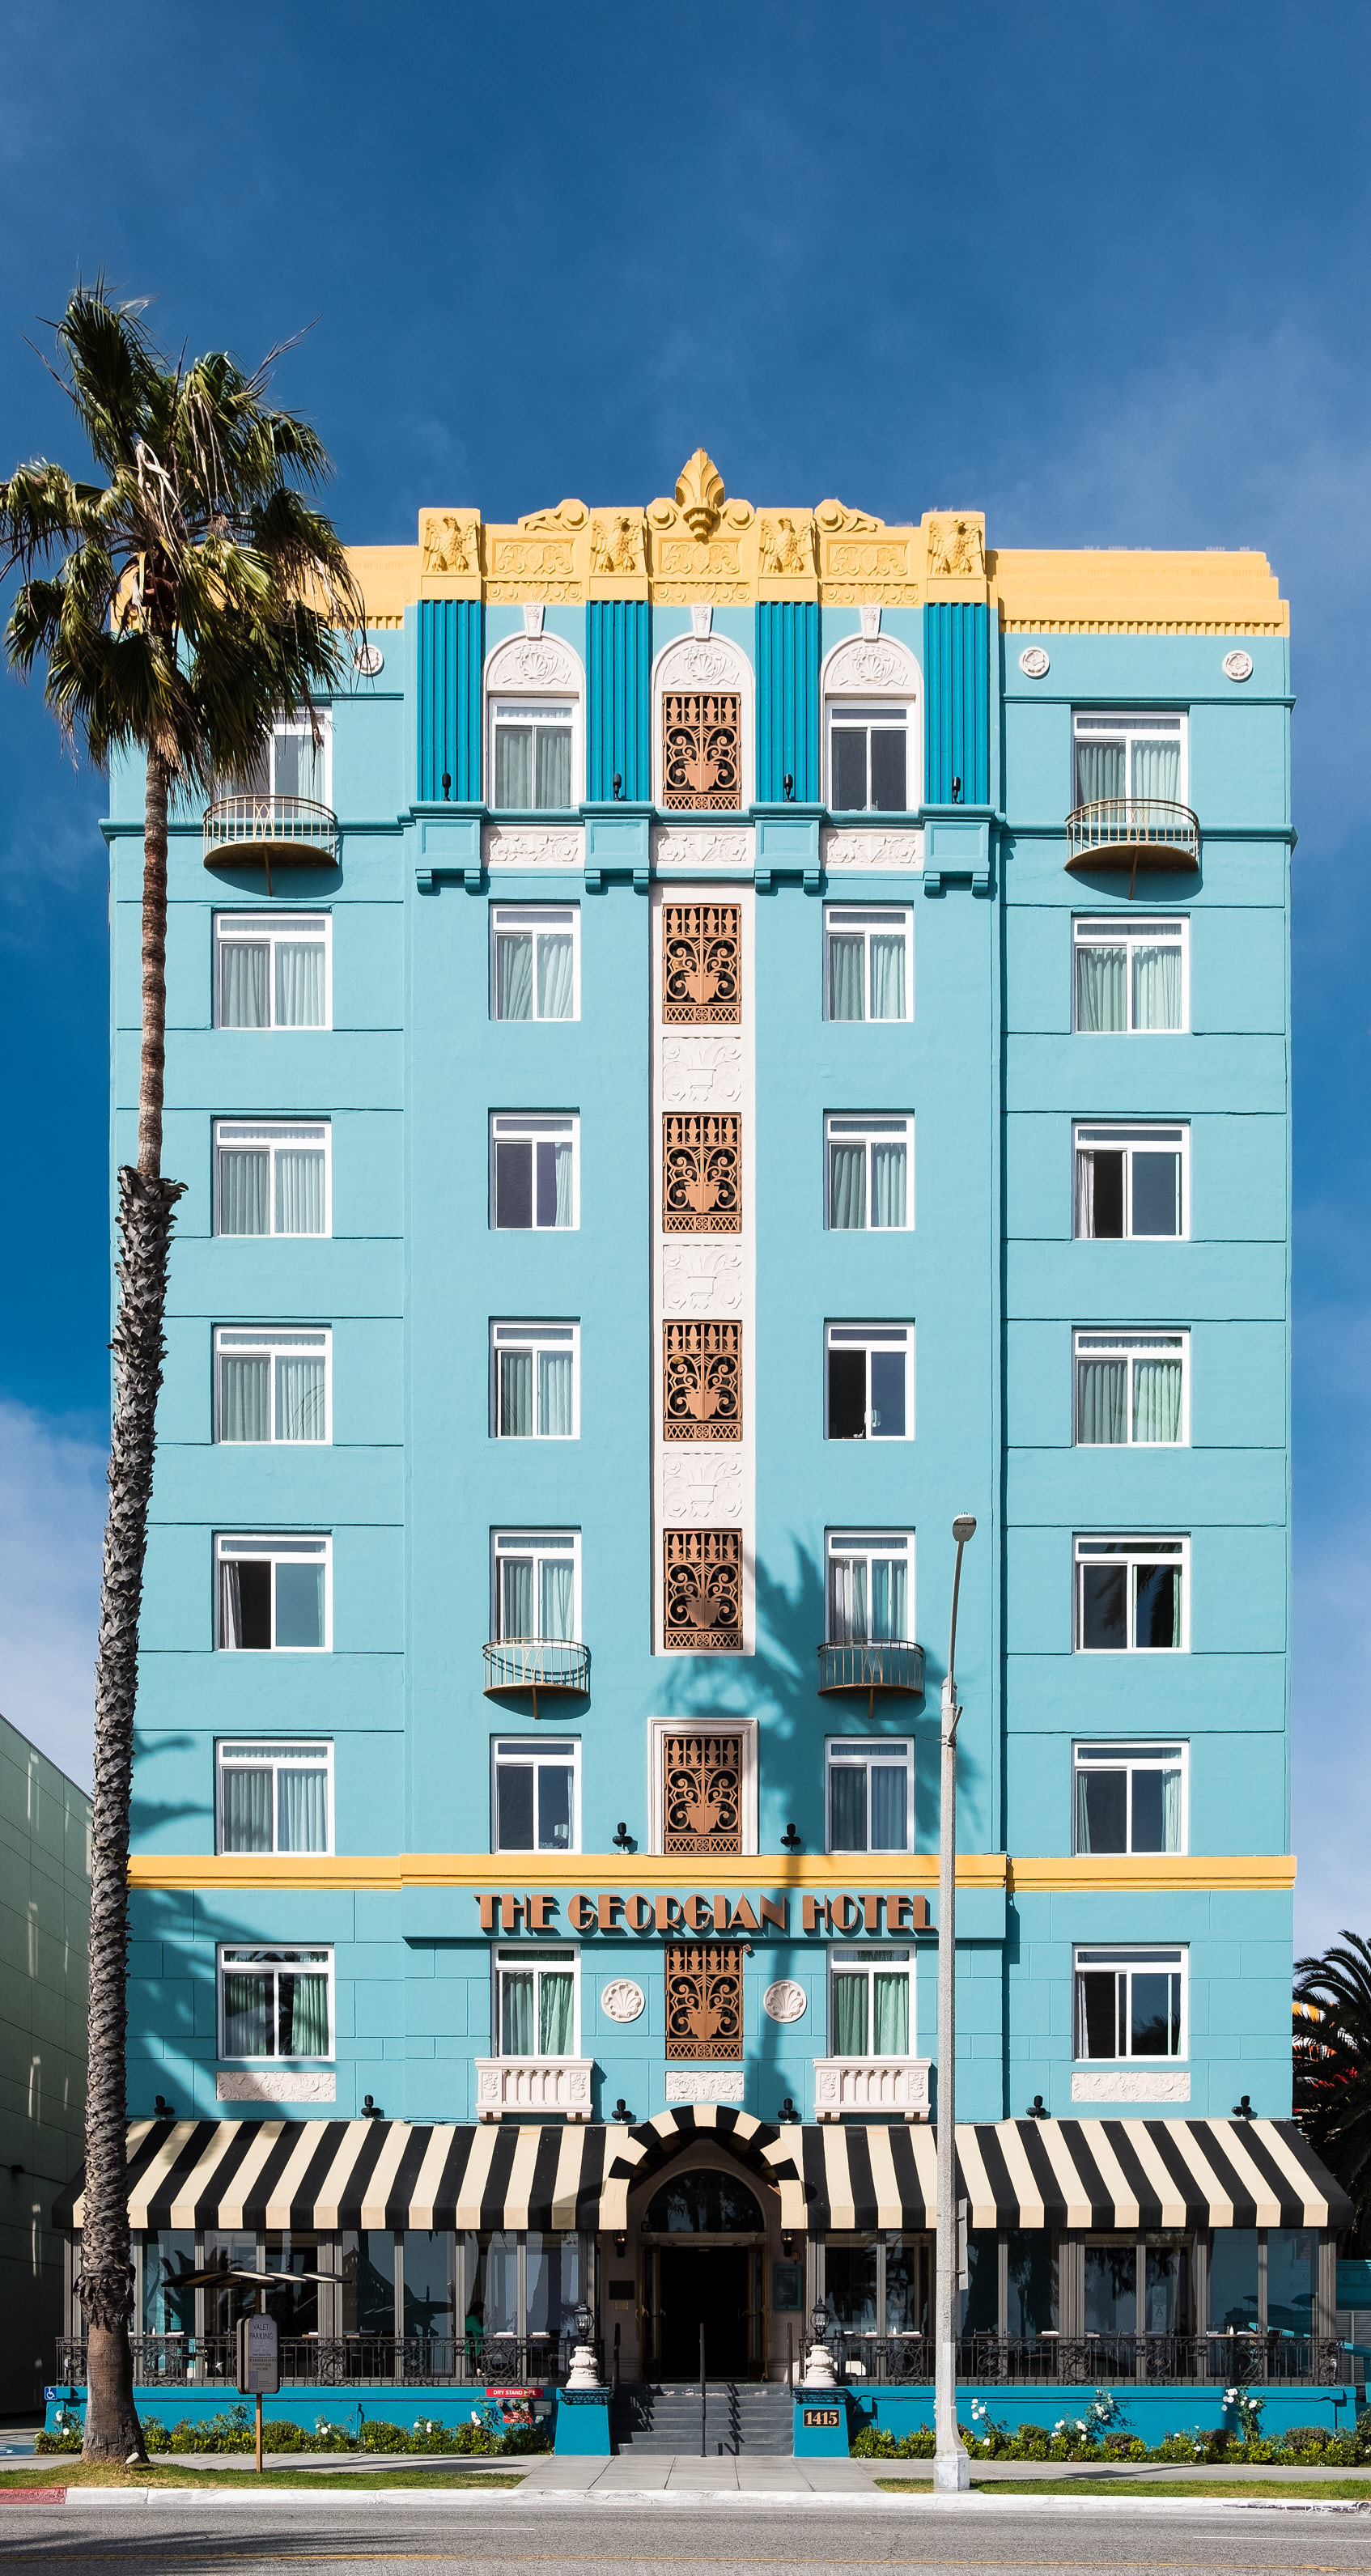 The Georgian Hotel: Santa Monica, California